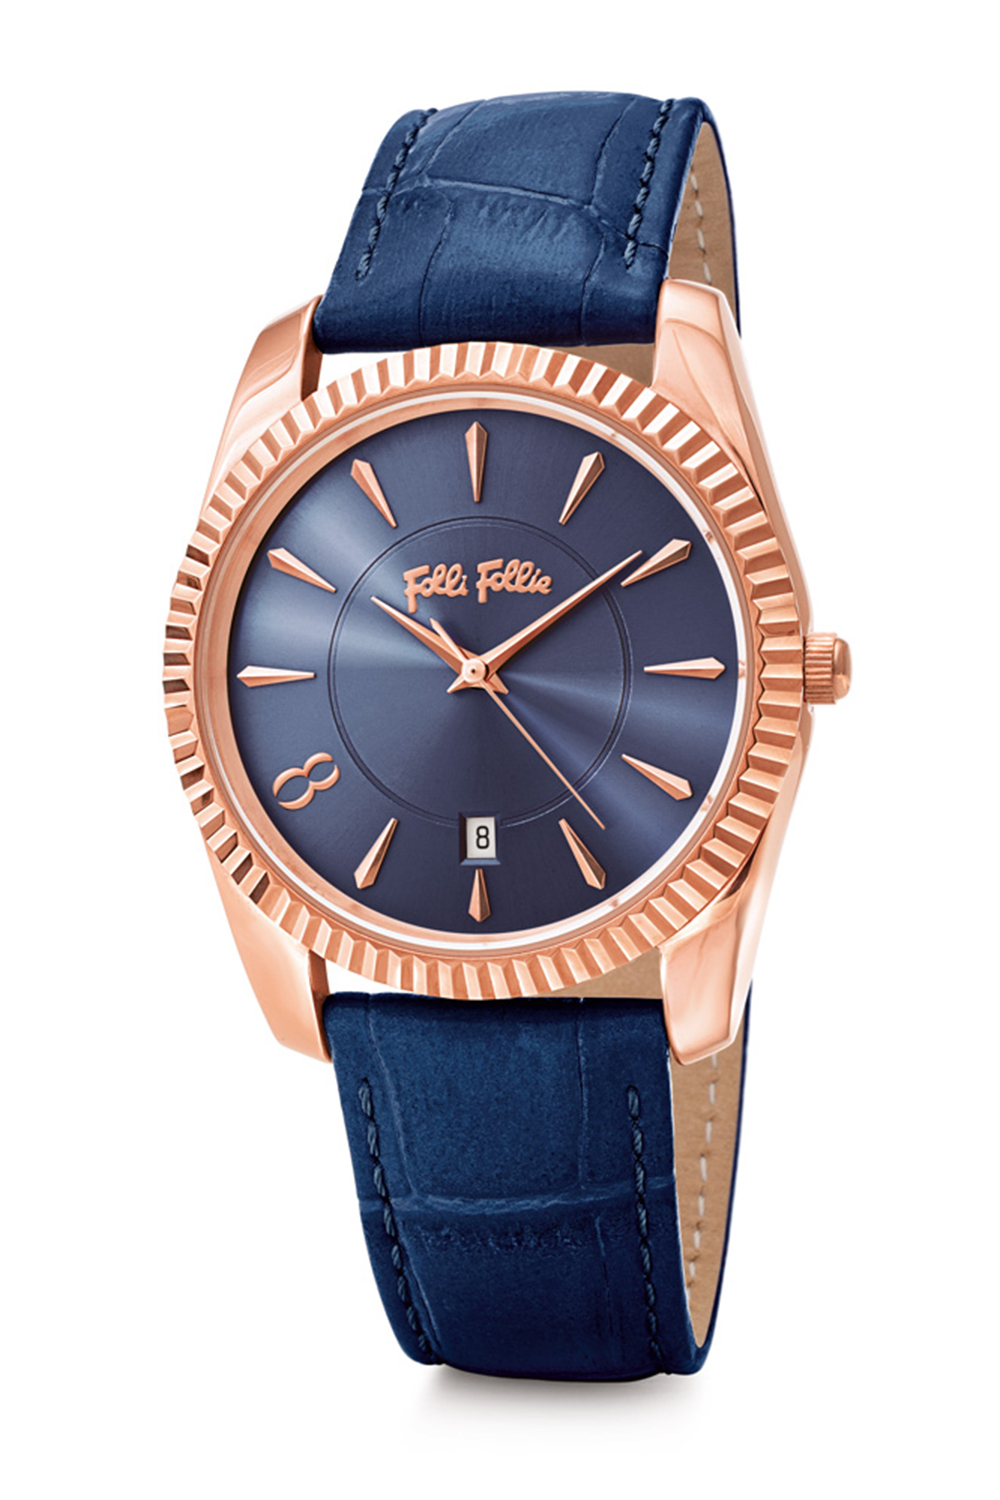 FOLLI FOLLIE – Γυναικείο ρολόι με δερμάτινο λουράκι FOLLI FOLLIE CHRONOS TALES μπλε WF18R043SDU-BL